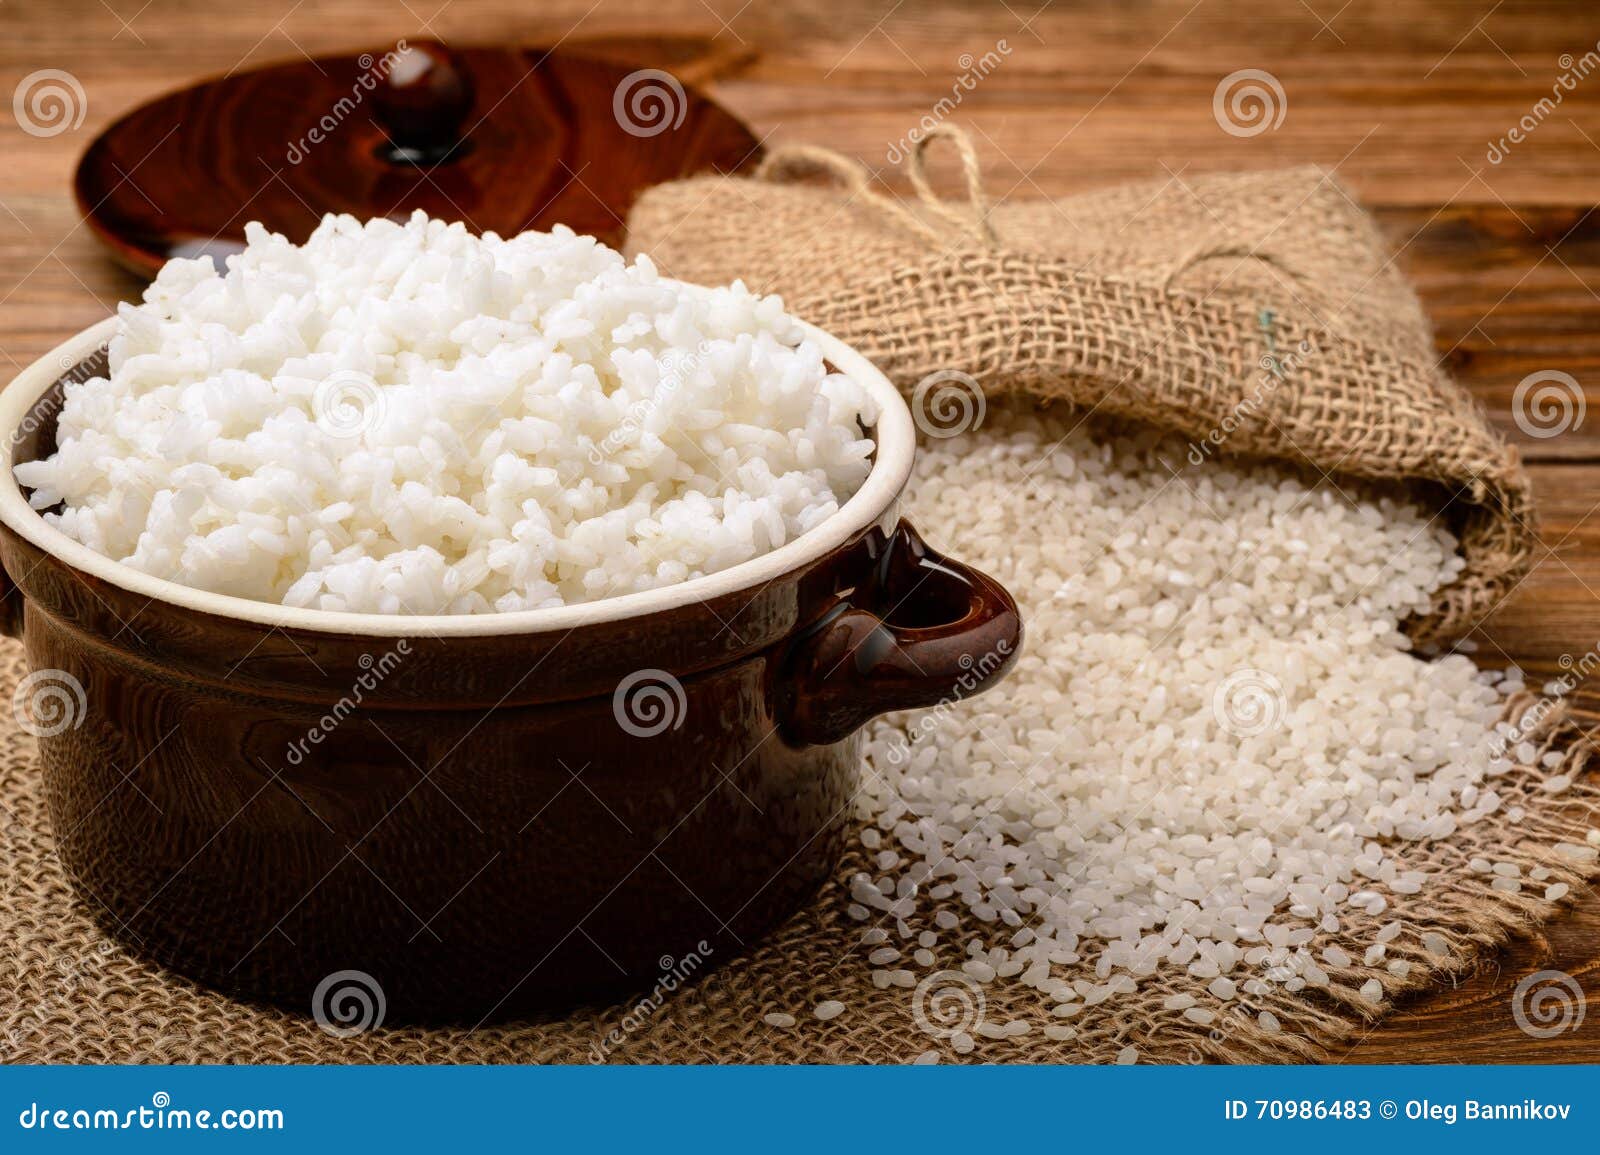 Кипящий рис. Рис. Белый рис. Рис в тарелке. Белый рис вареный.